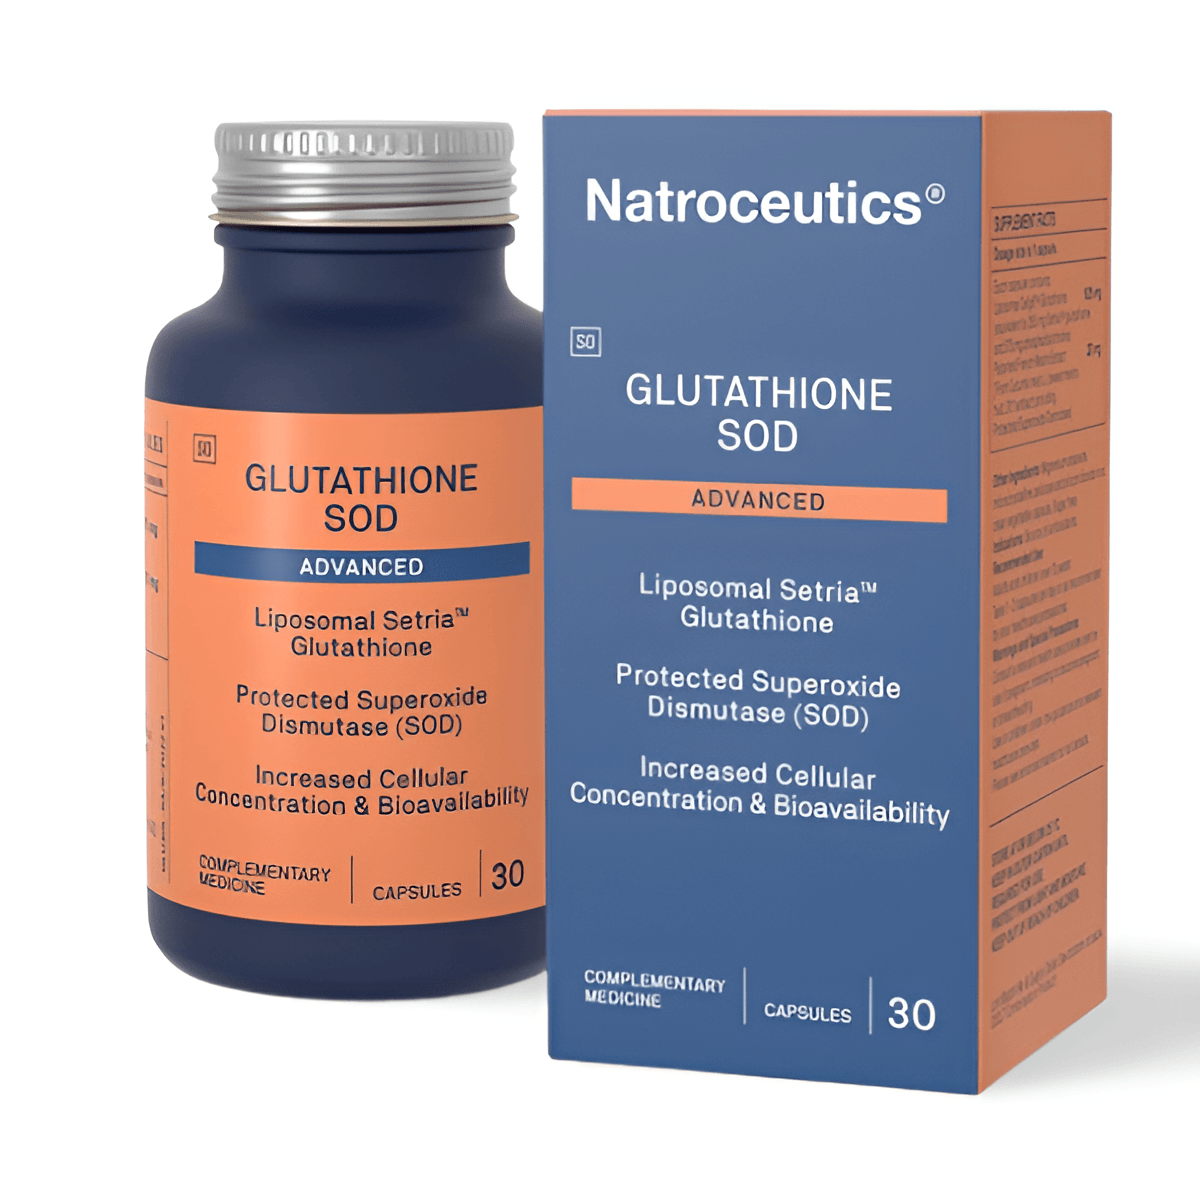 NATROCEUTICS Glutathione SOD Advanced - THE GOOD STUFF